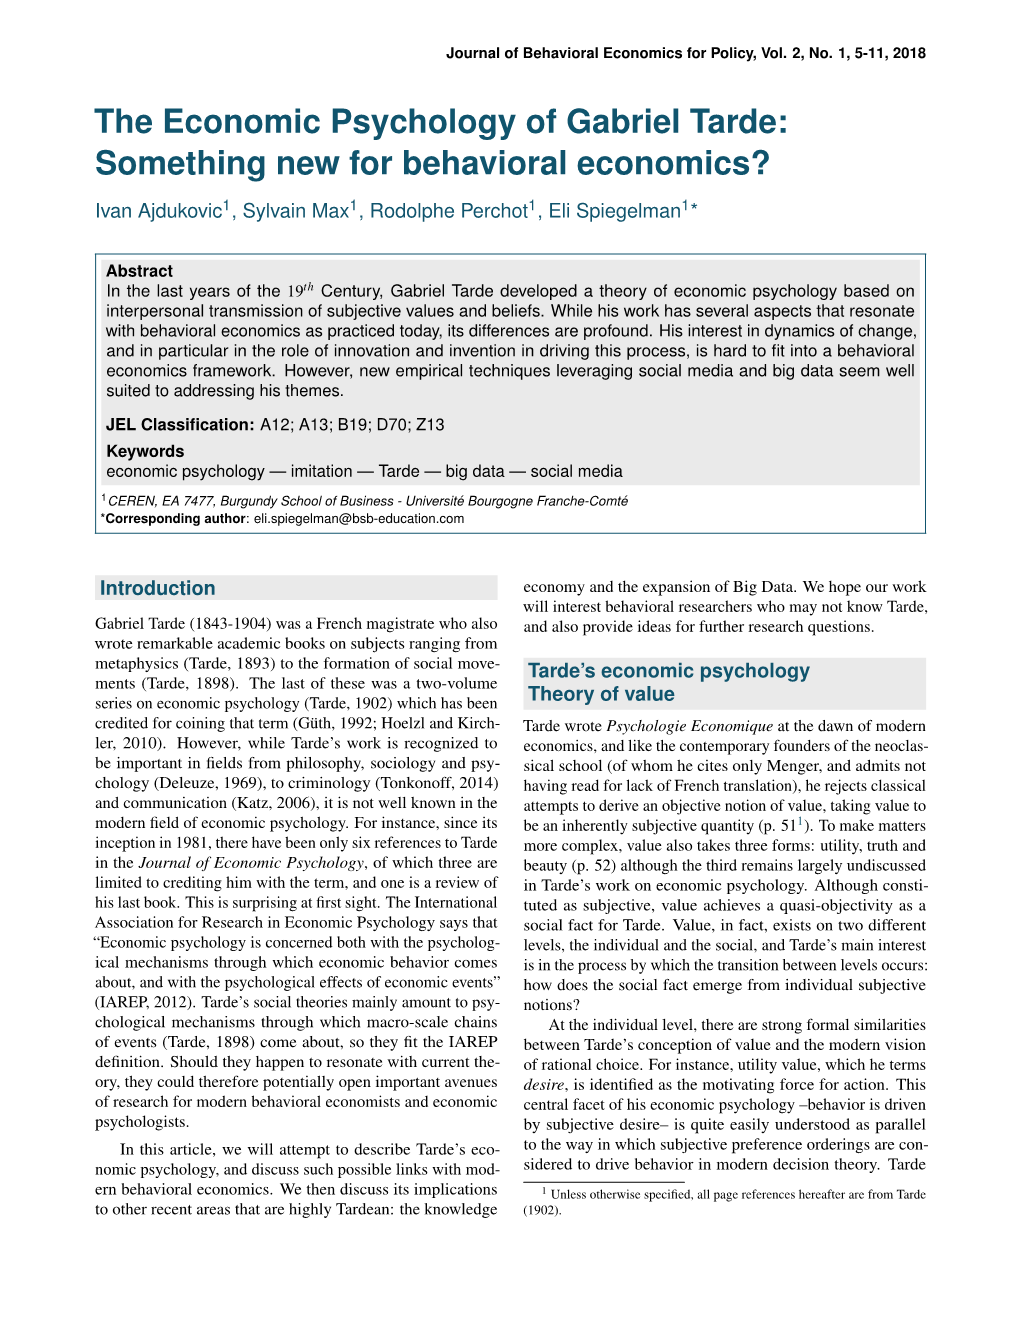 The Economic Psychology of Gabriel Tarde: Something New for Behavioral Economics?